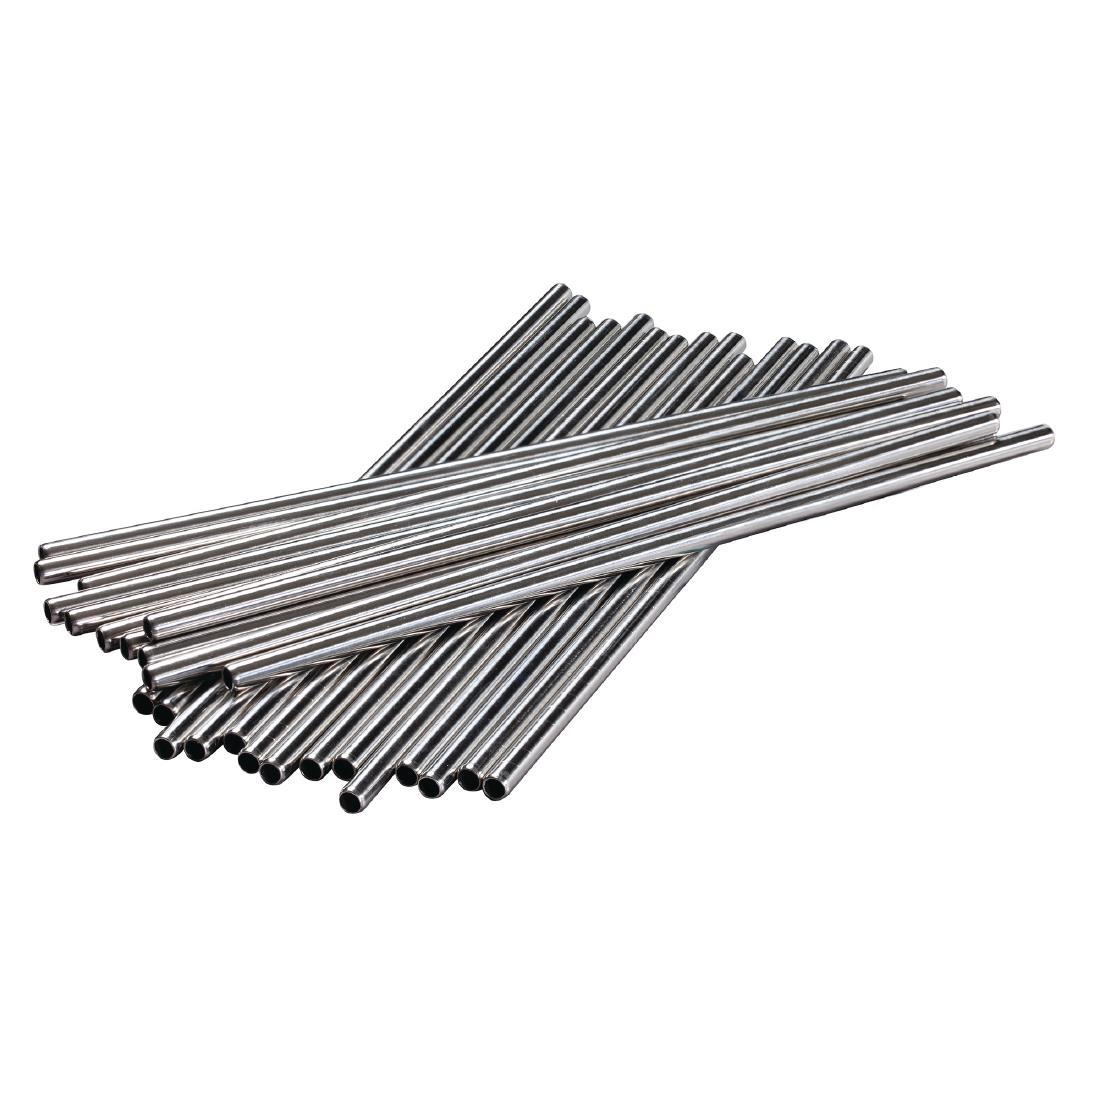 Stainless Steel Metal Straws 8.5" (Pack of 25) - CW490  - 2